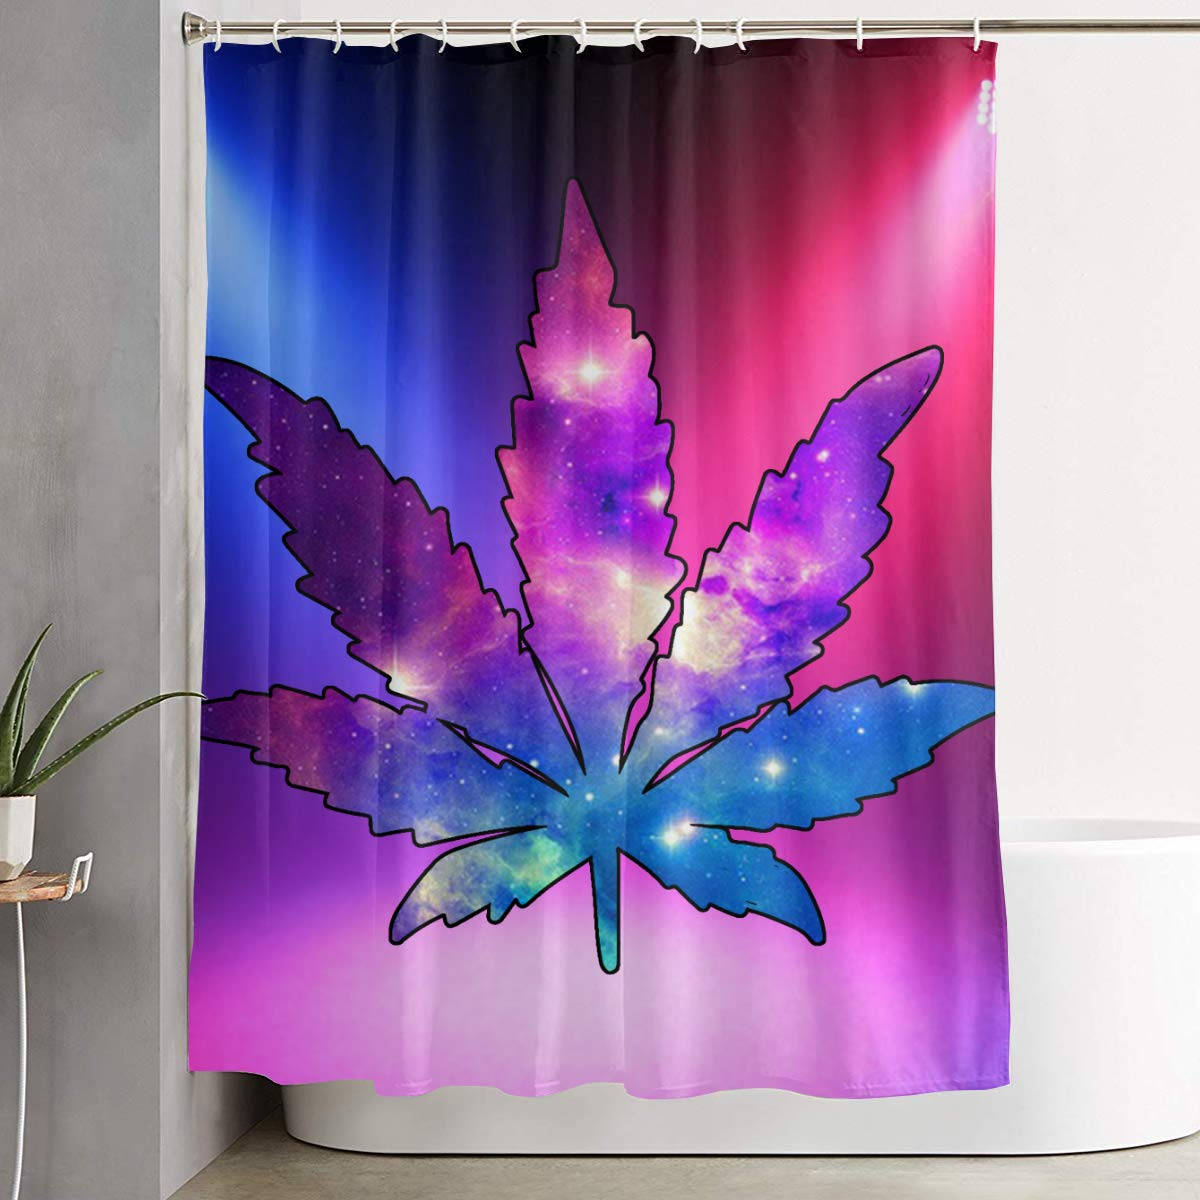 Weed Leaf On Bathroom Curtain Wallpaper